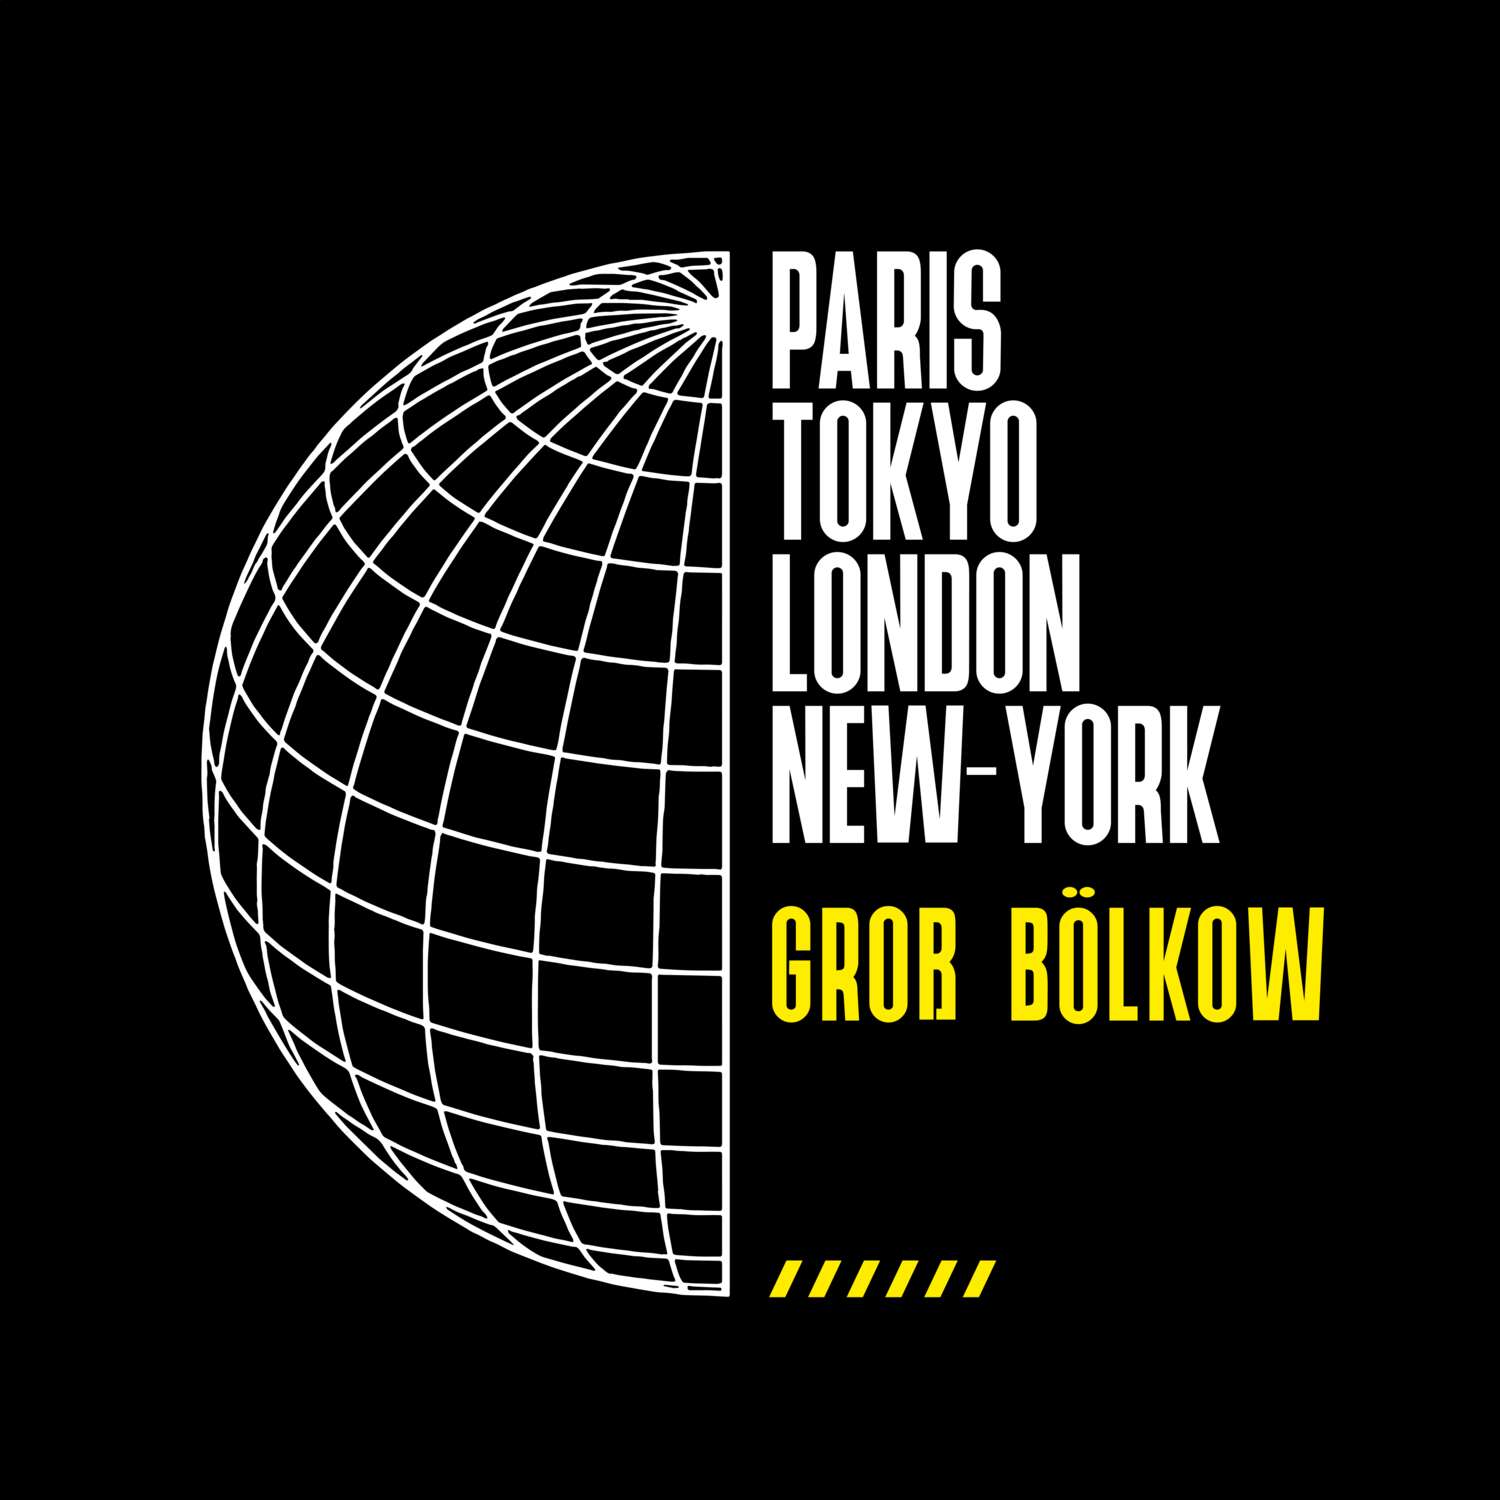 Groß Bölkow T-Shirt »Paris Tokyo London«